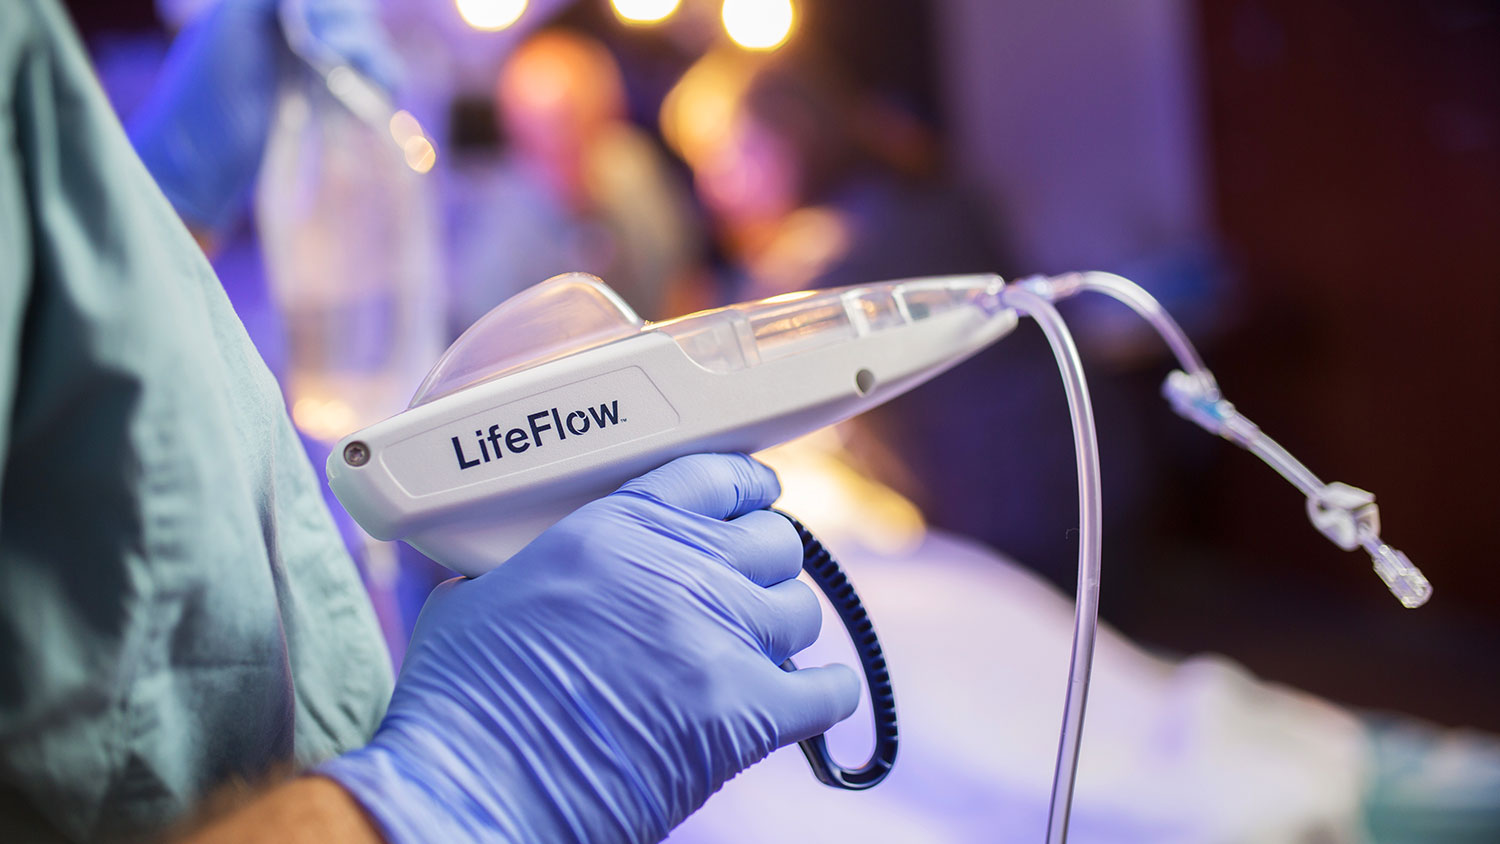 LifeFlow device